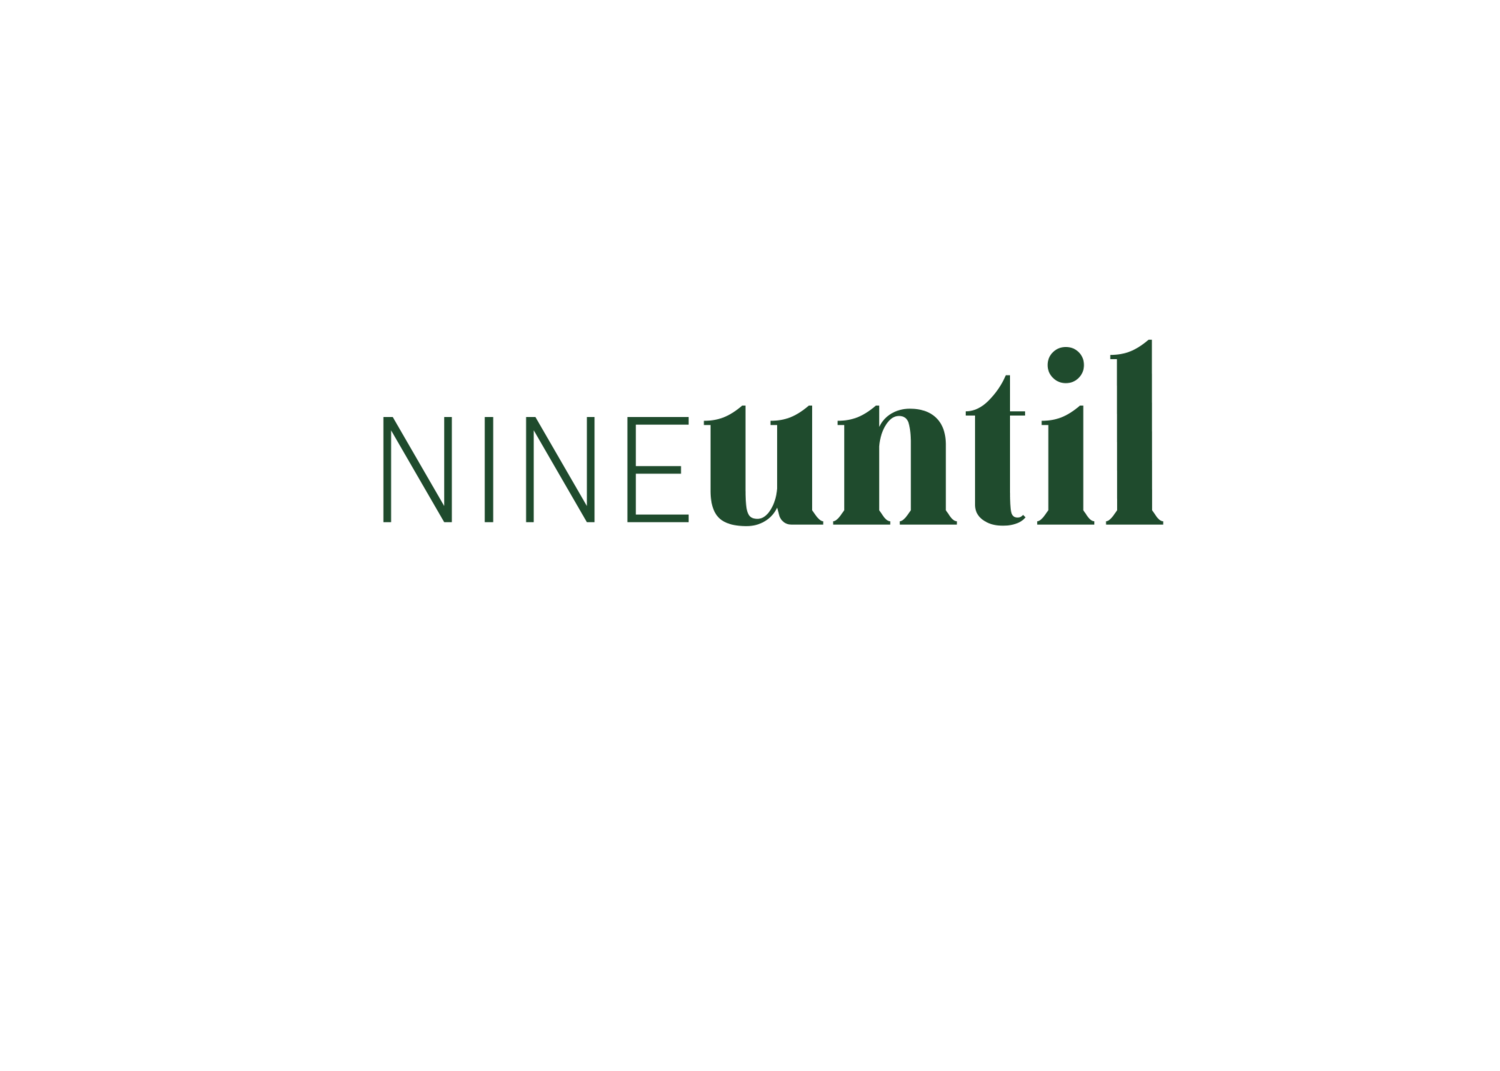 Nine Until